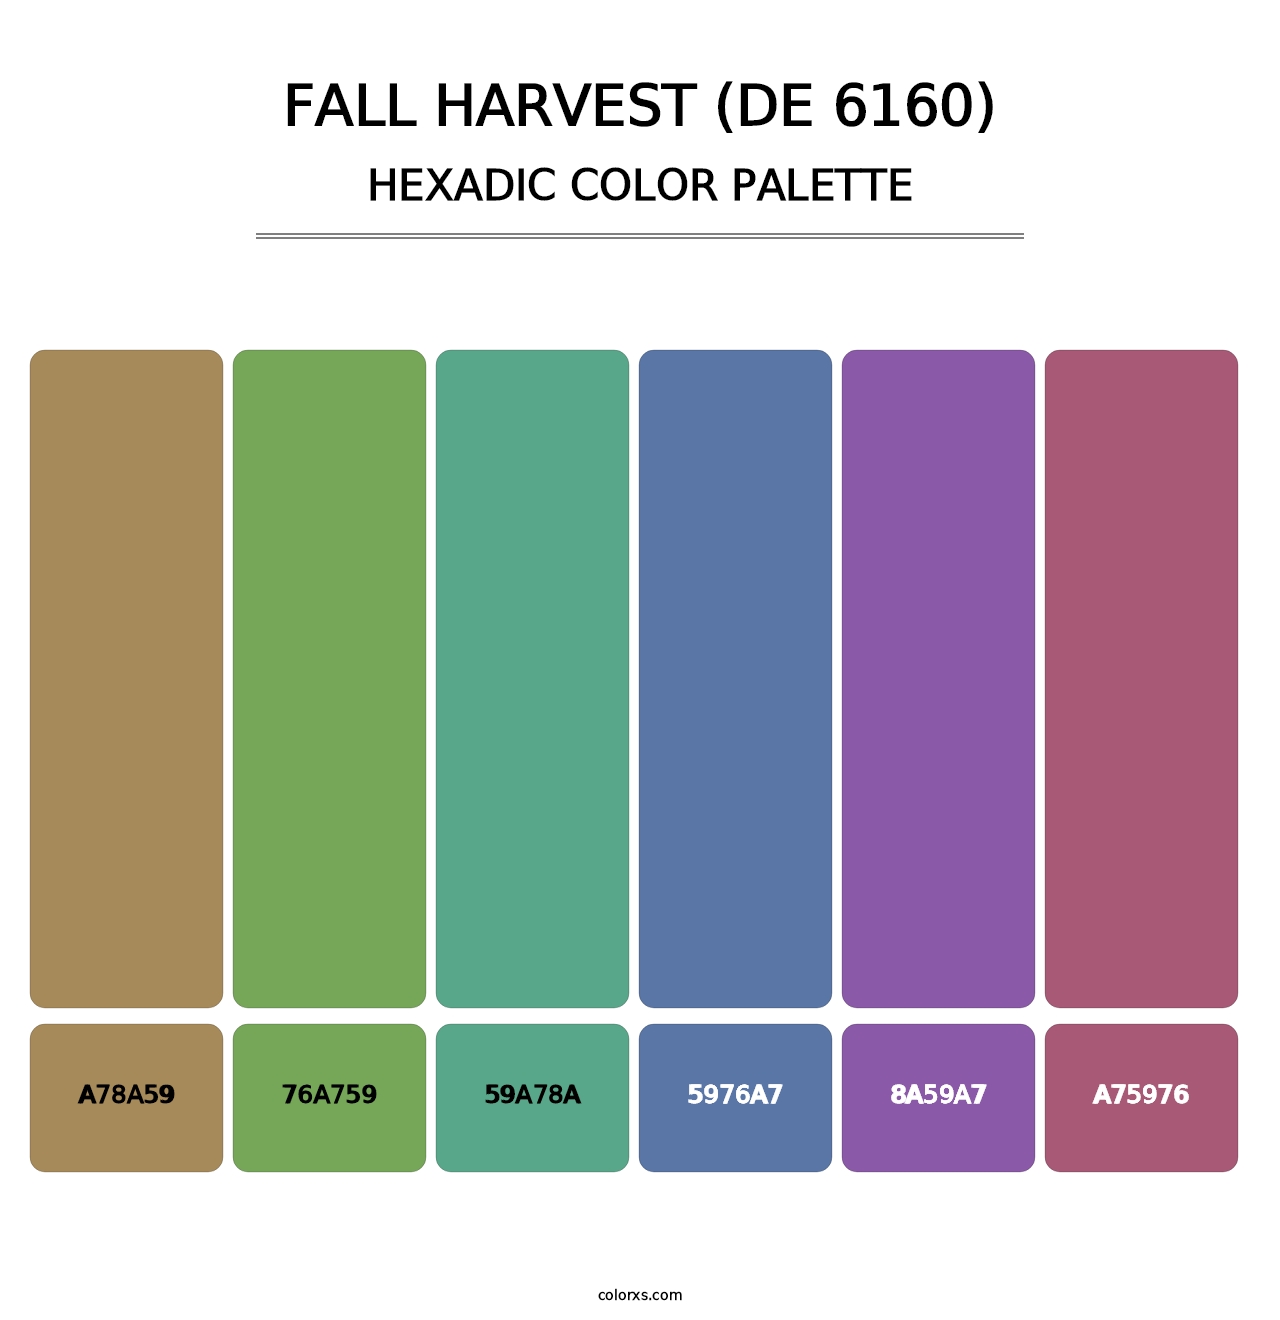 Fall Harvest (DE 6160) - Hexadic Color Palette